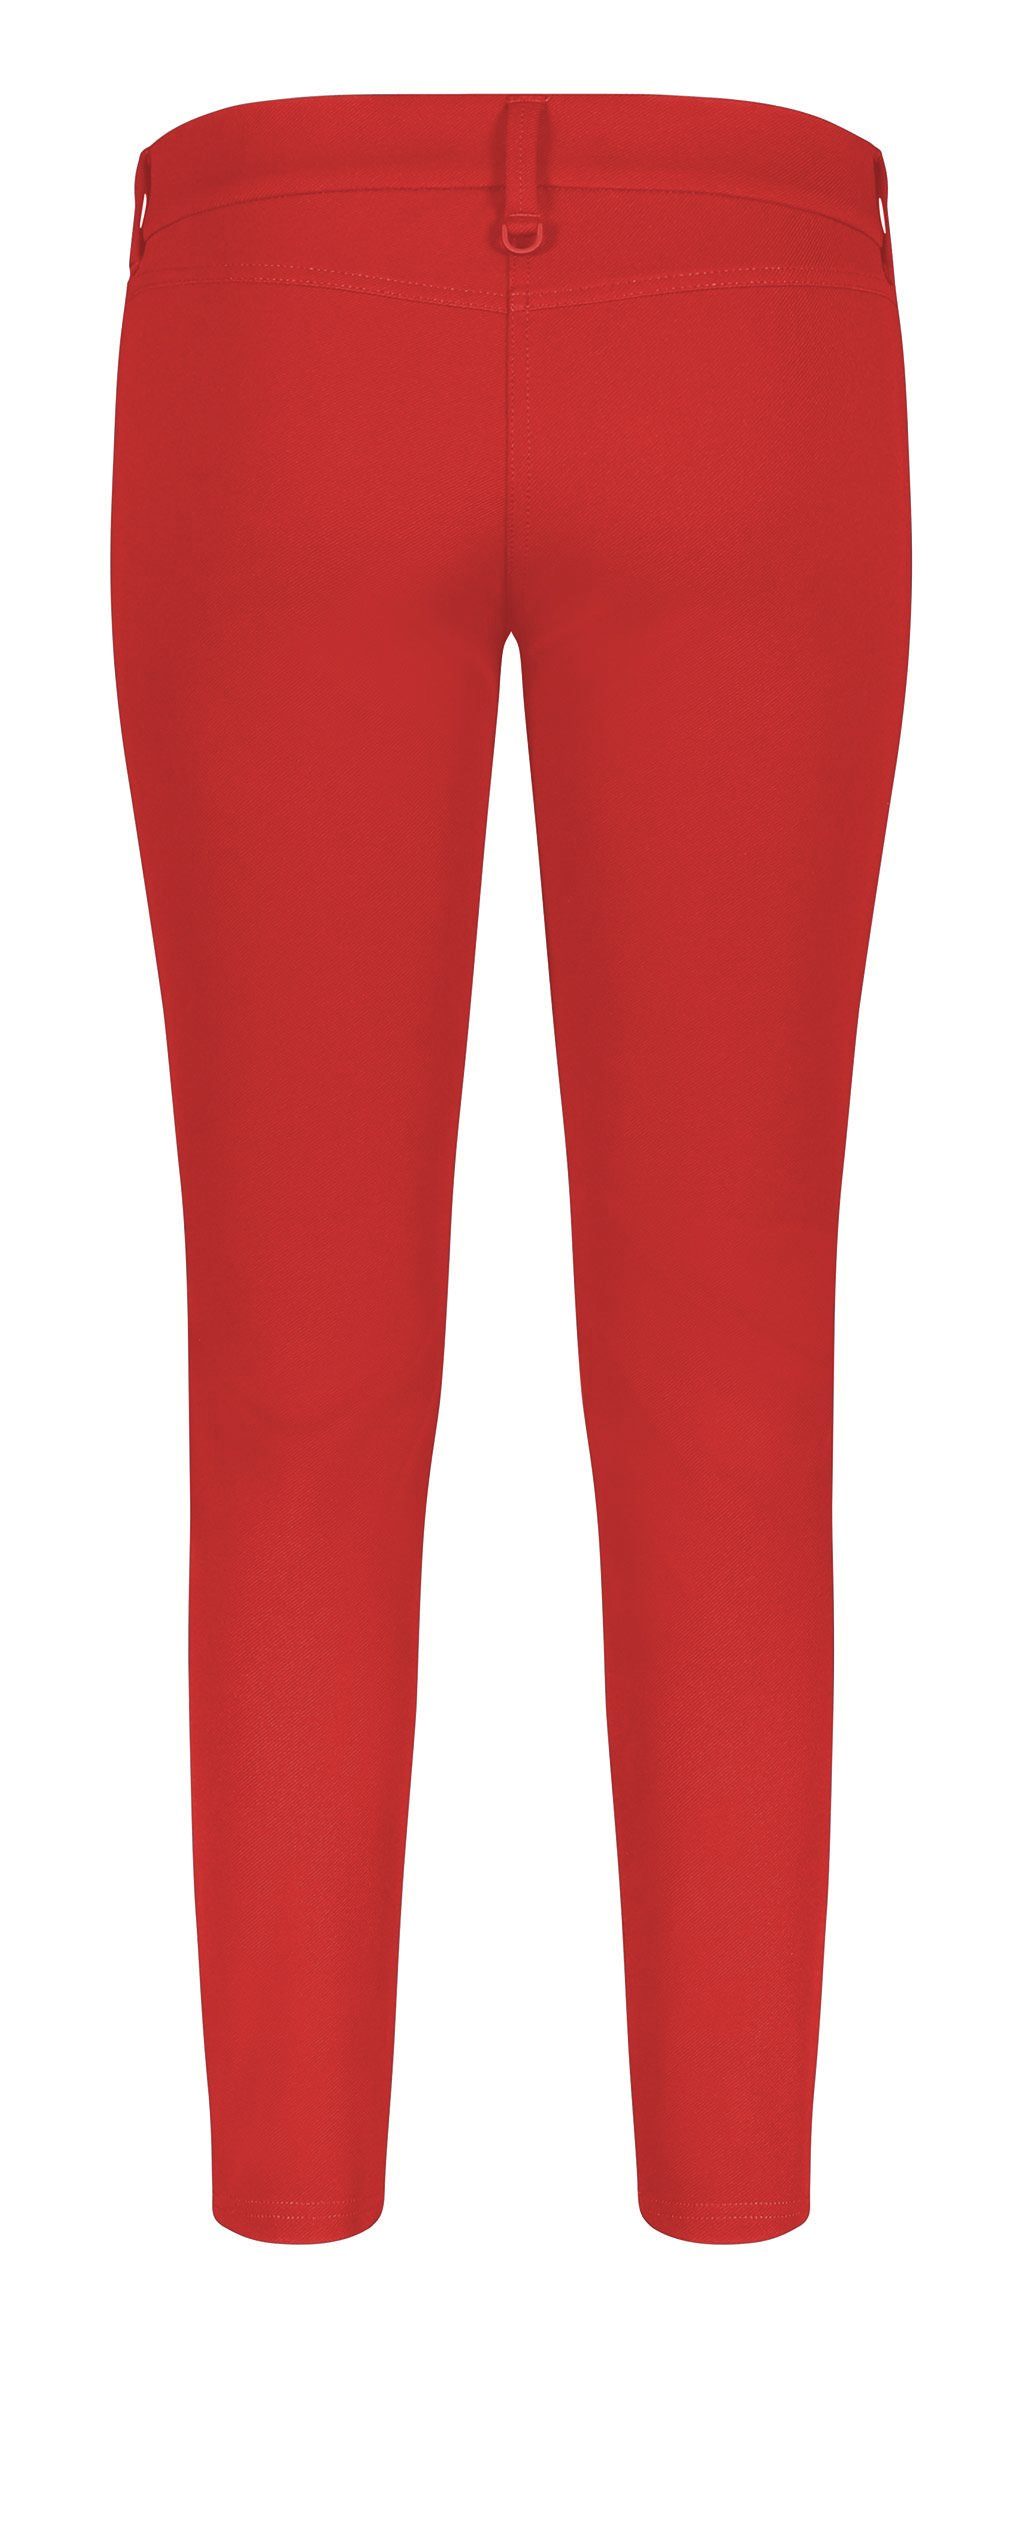 PANTS VISION MAC 5991-00-0172 892 MAC Stretch-Jeans red scarlet